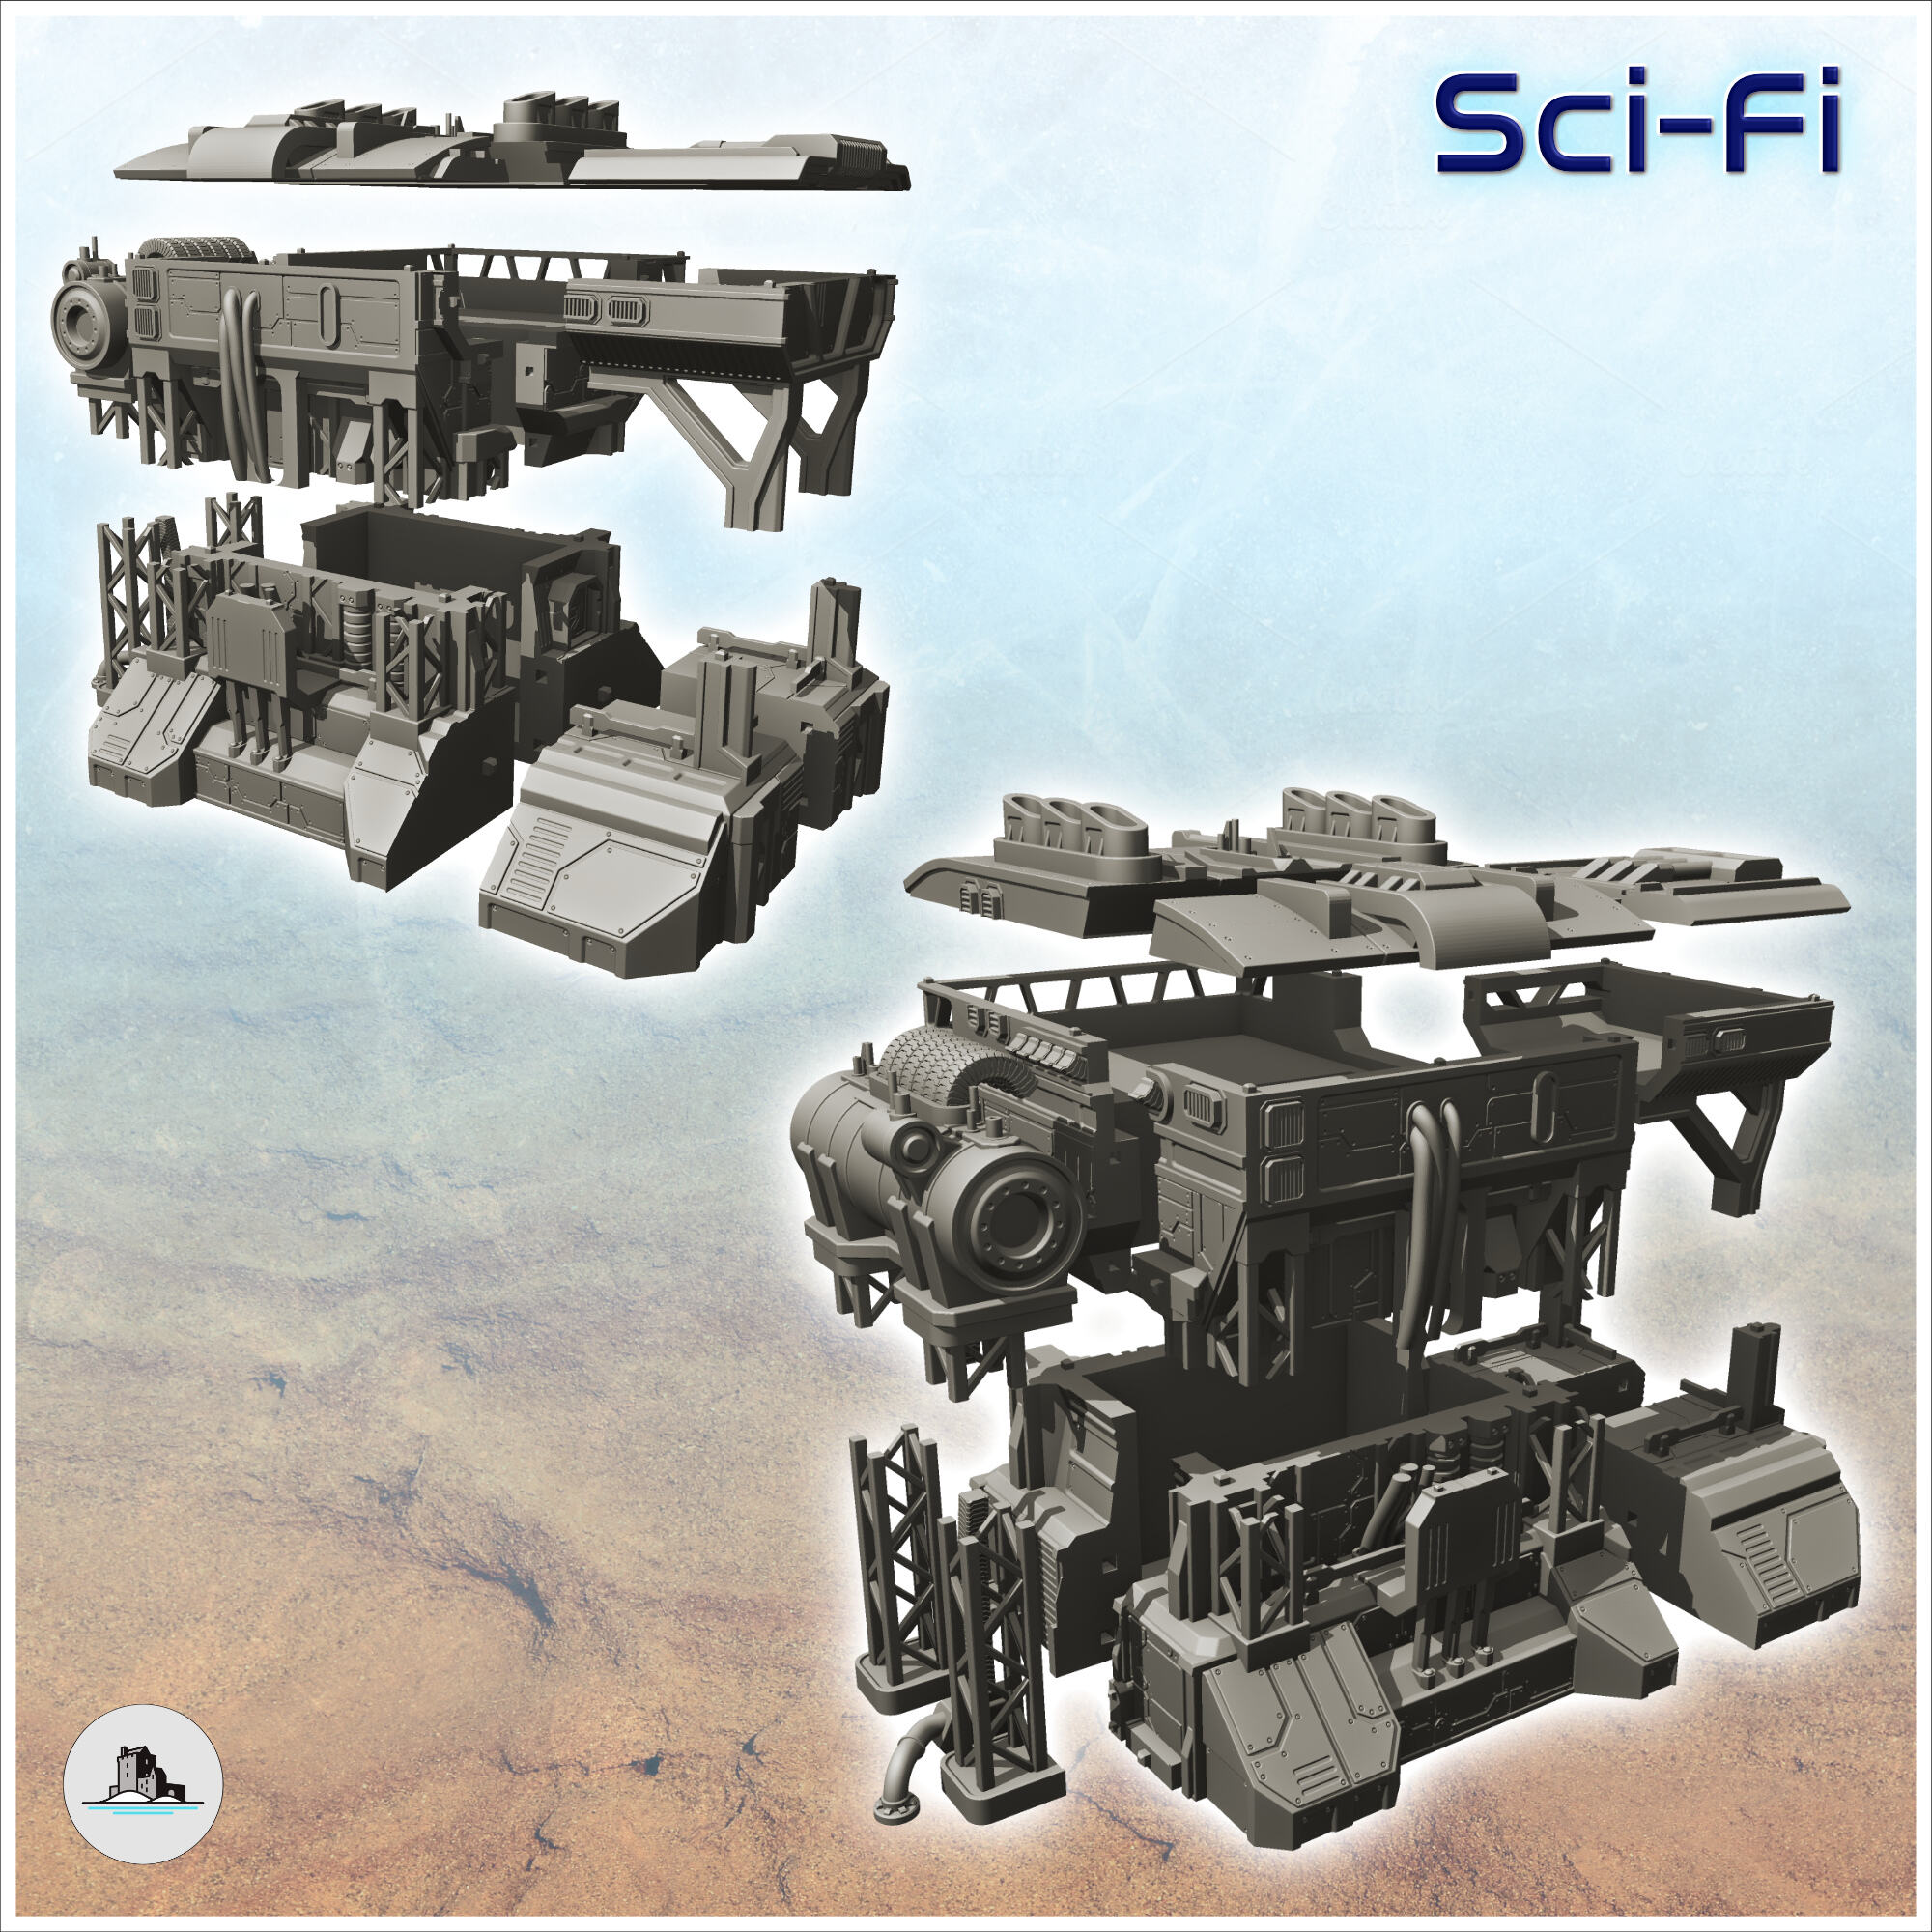 Large Sci-Fi production - Terrain Scifi Science fiction SF